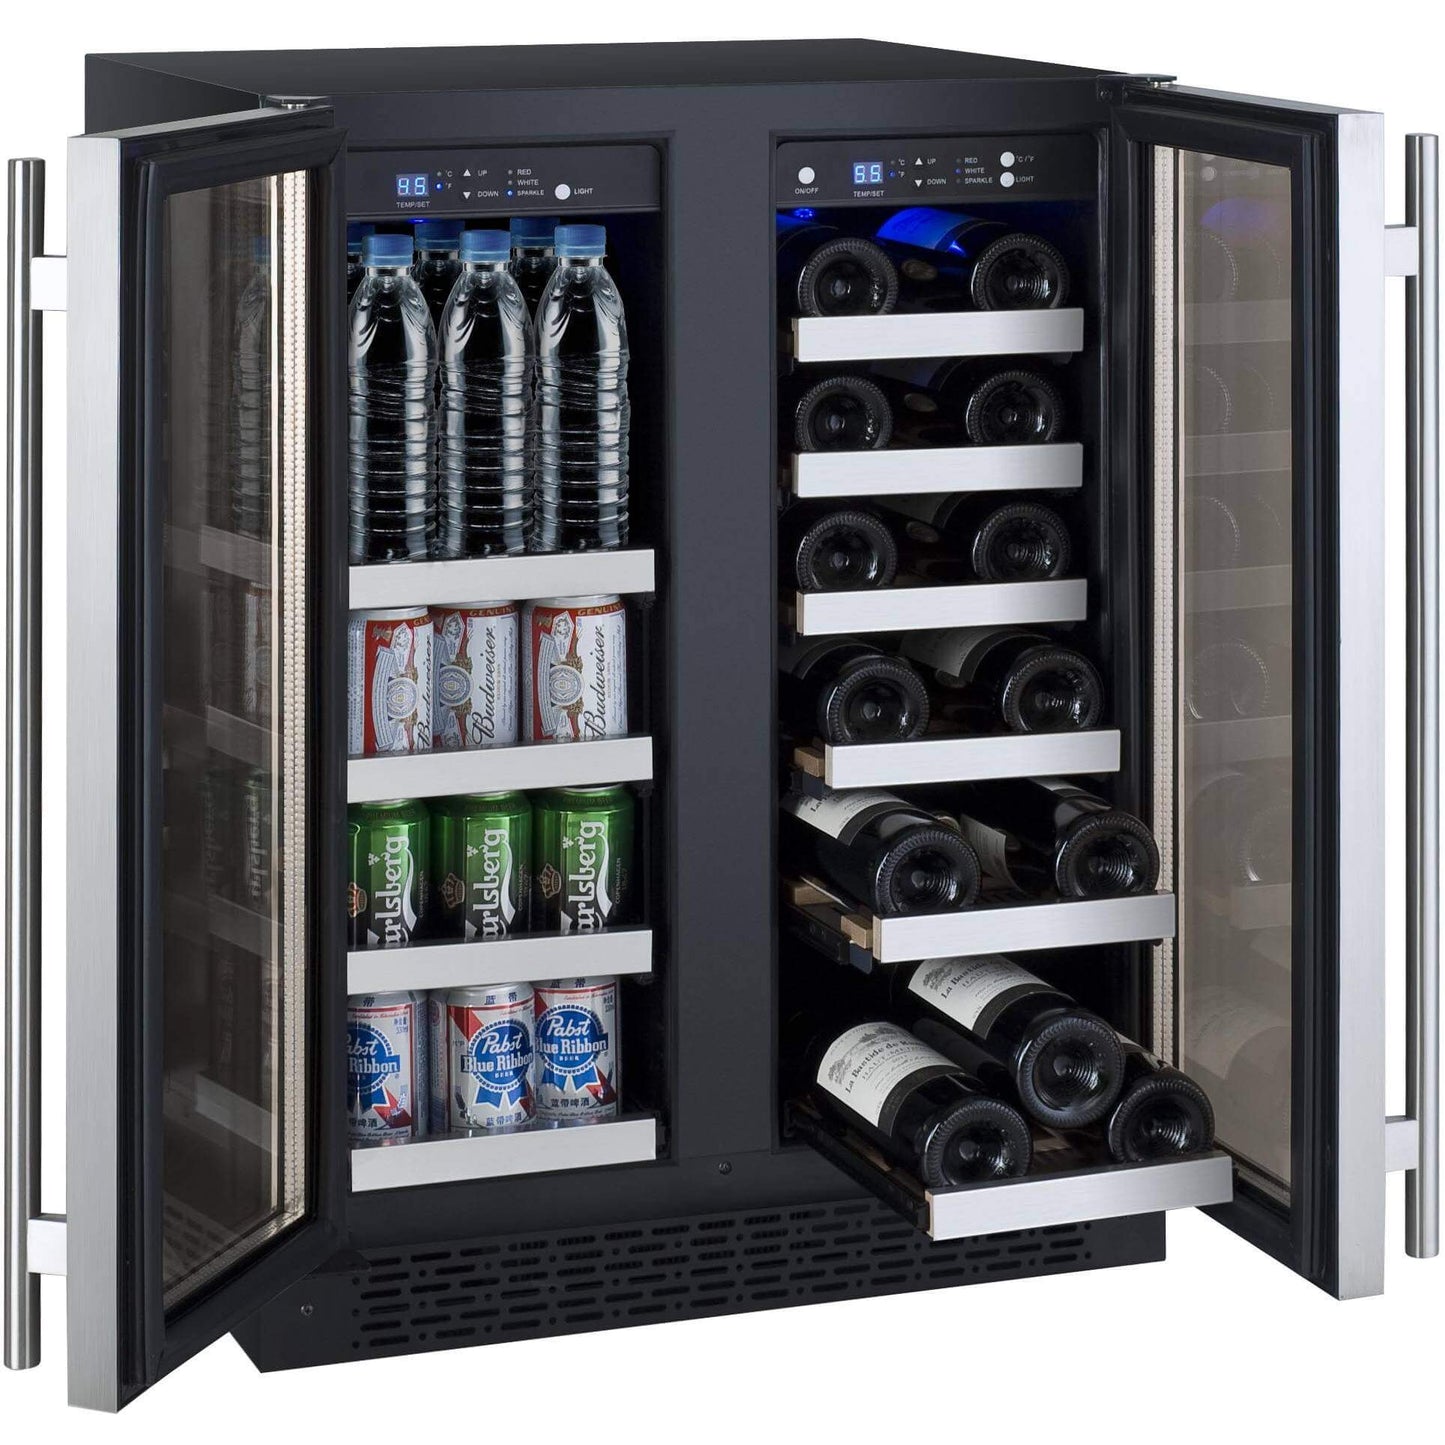 Allavino 24" Wide FlexCount II Tru-Vino 18 Bottle/66 Cans Dual Zone Stainless Steel Wine Refrigerator/Beverage Center